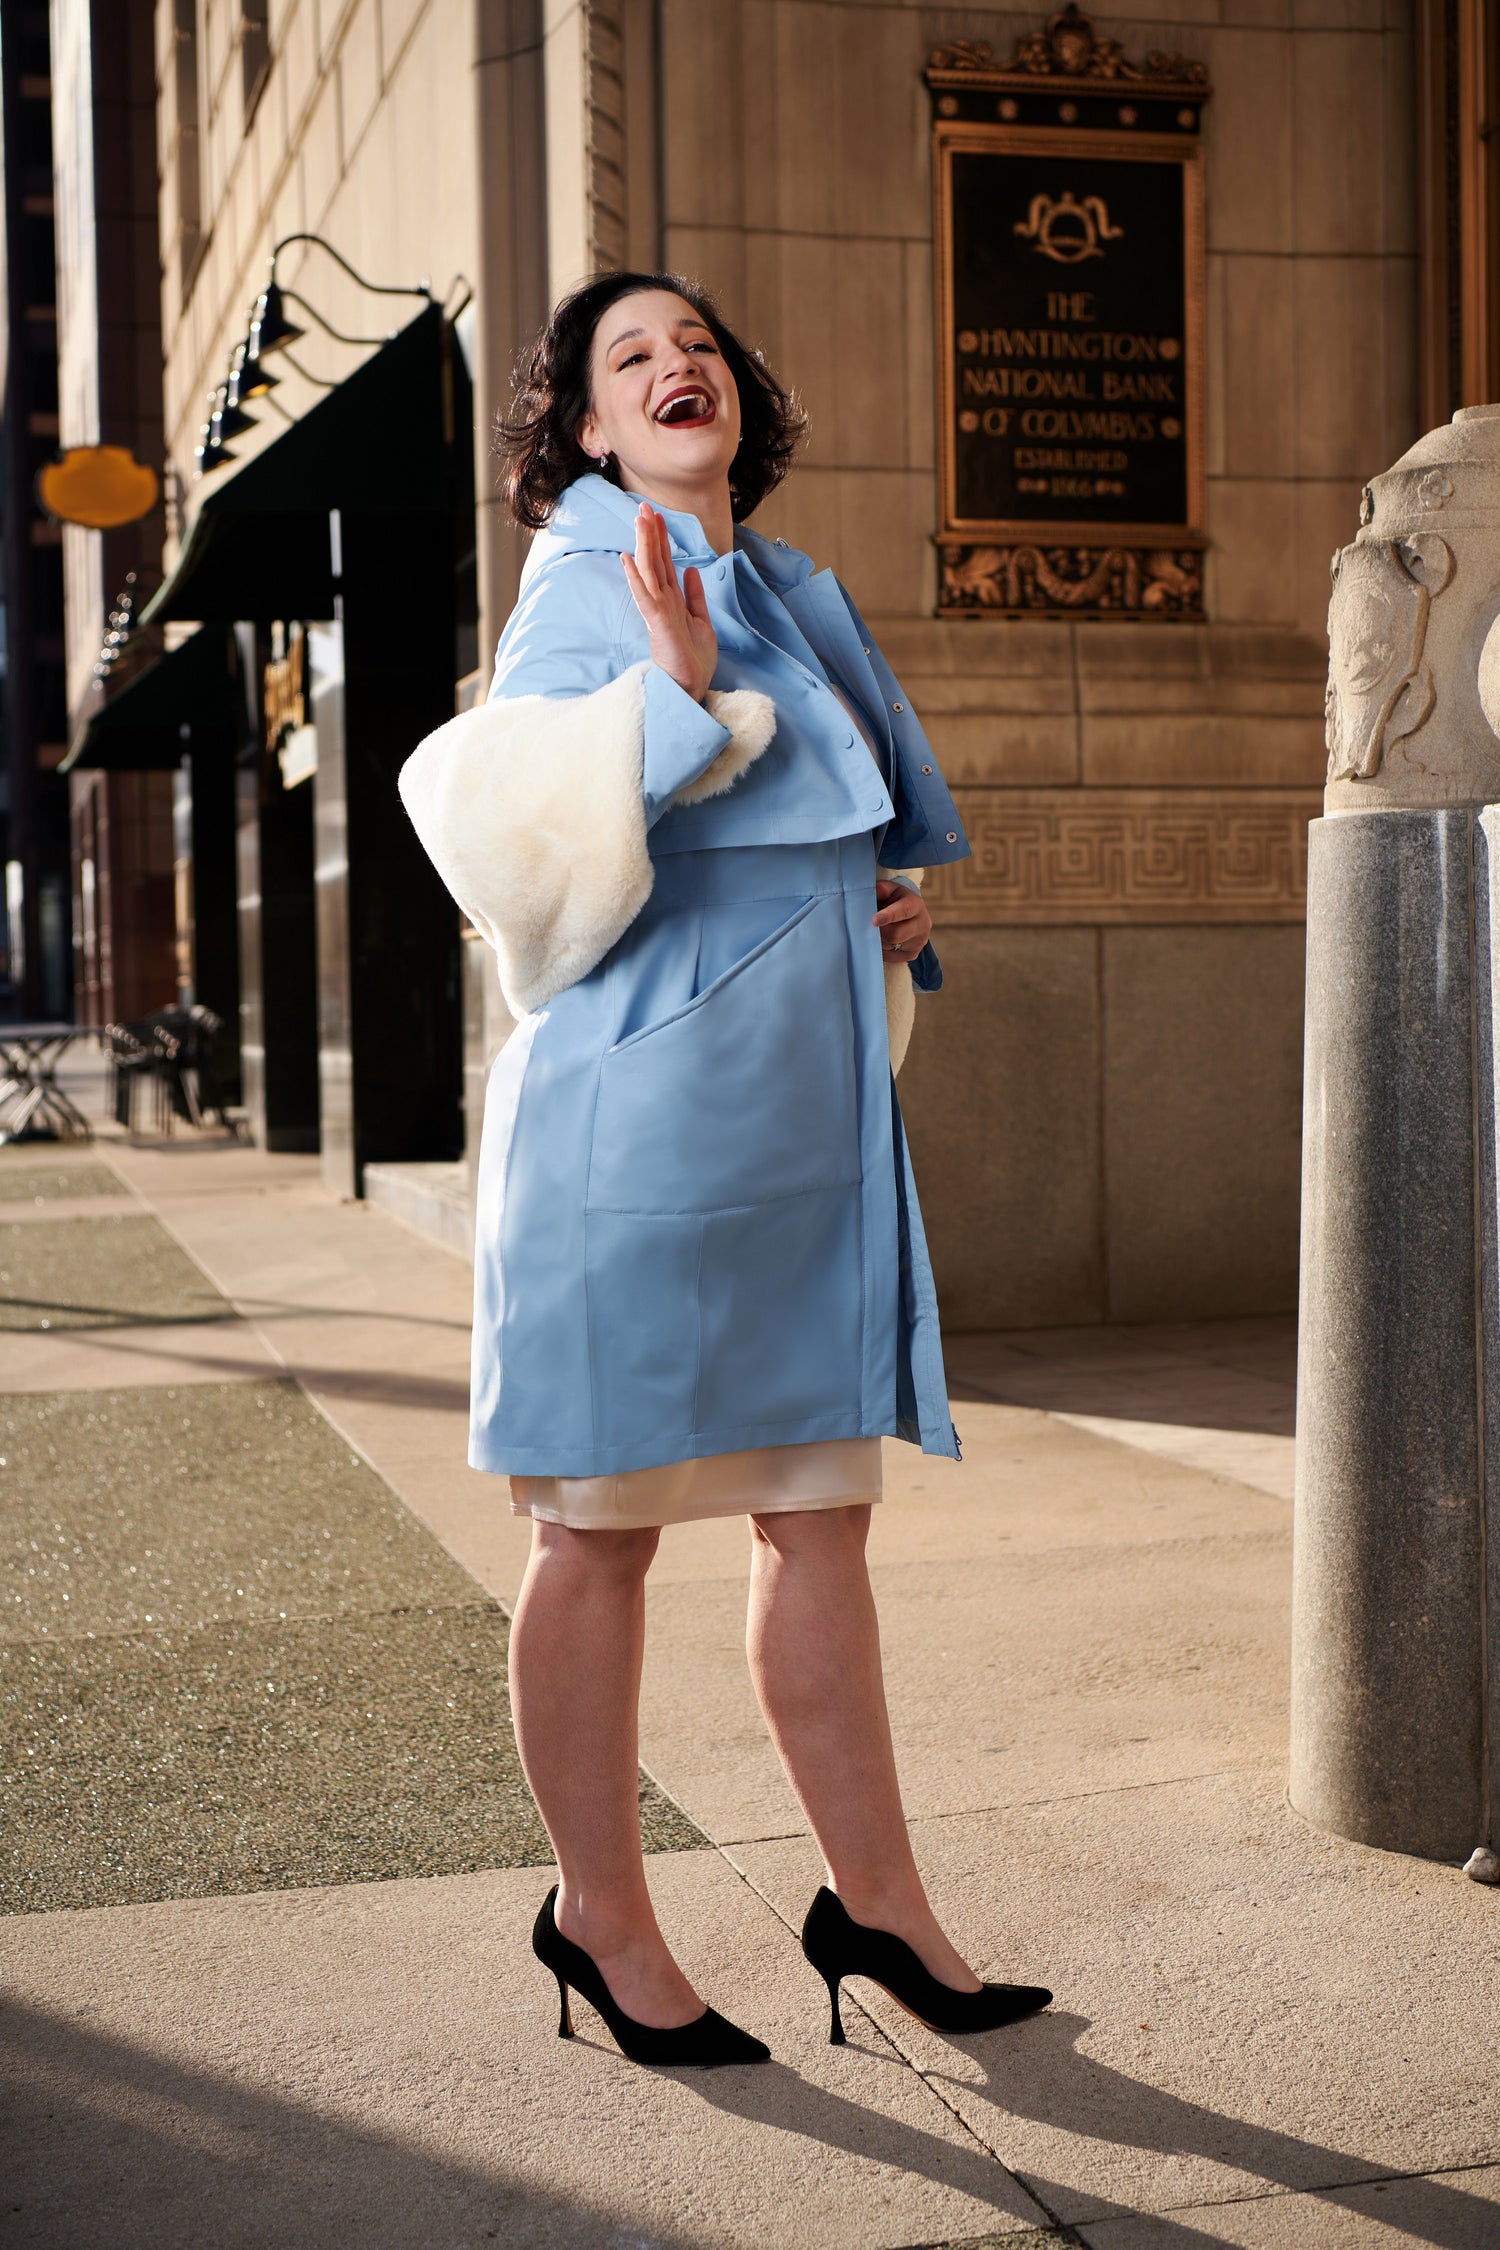 woman in blue rain jacket and heels with vegan fur stole marilyn monroe inspired